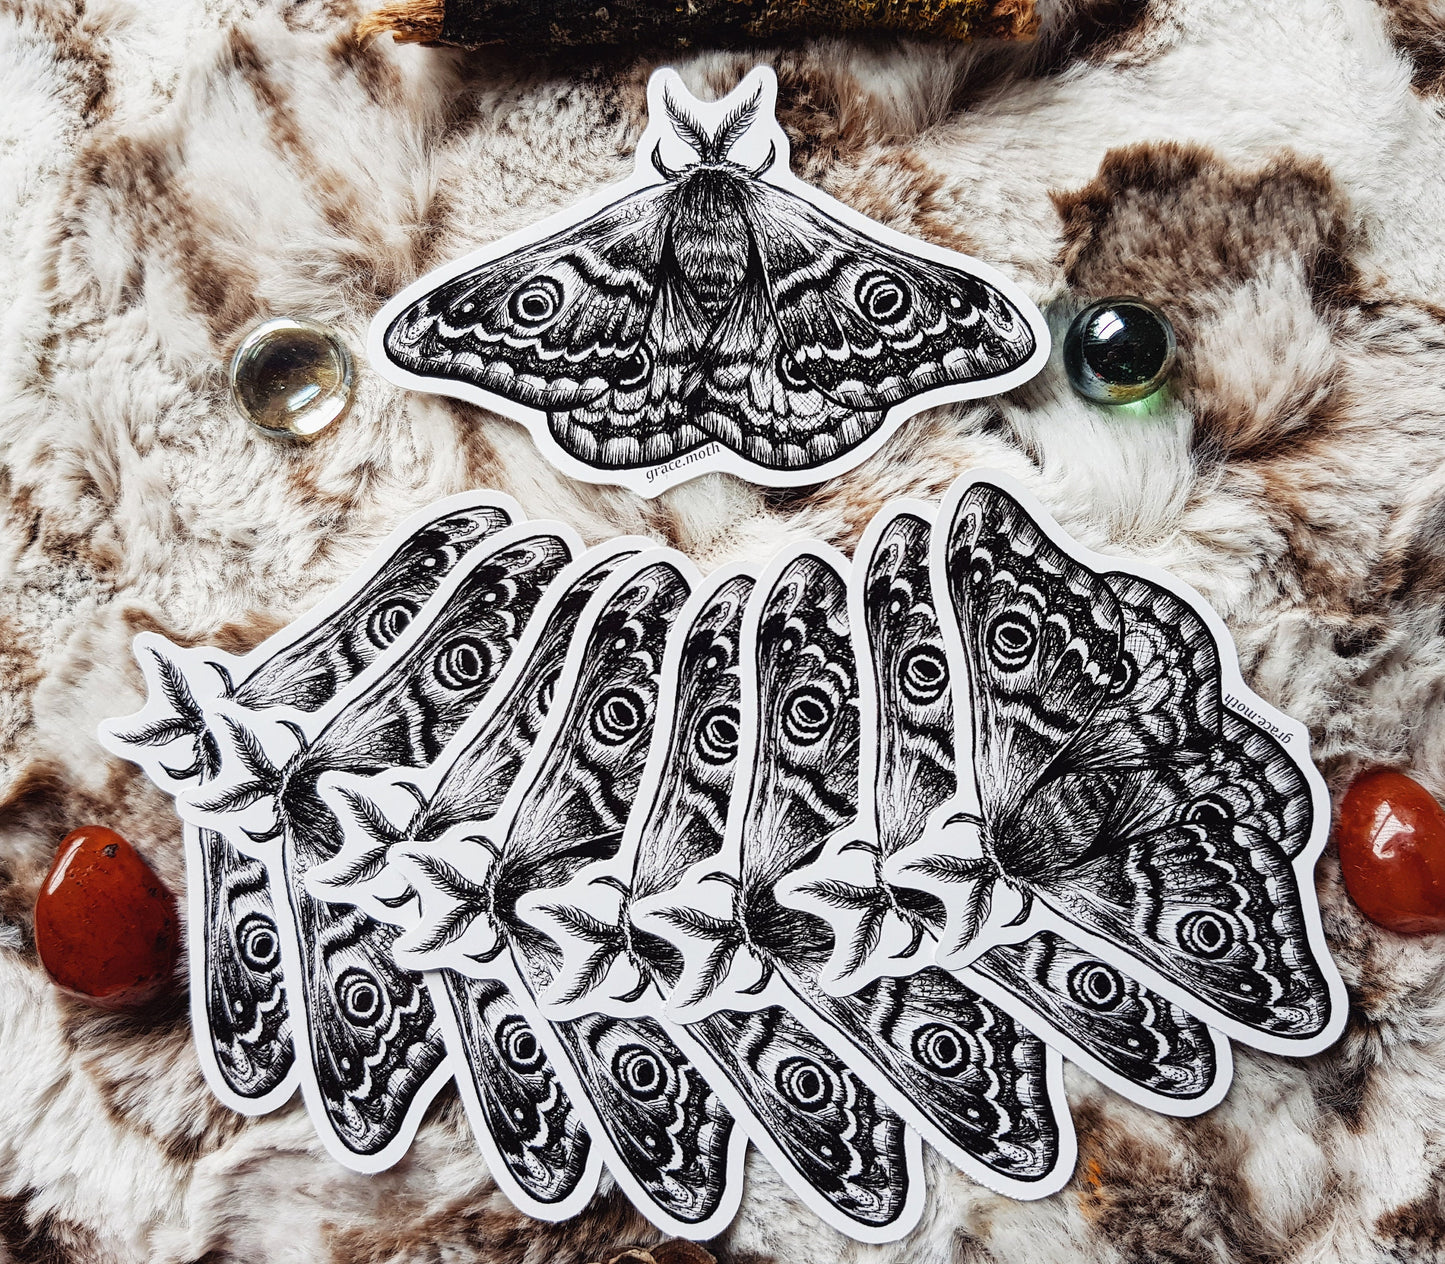 Emperor Moth - Vinyl Sticker 10cm by 6cm